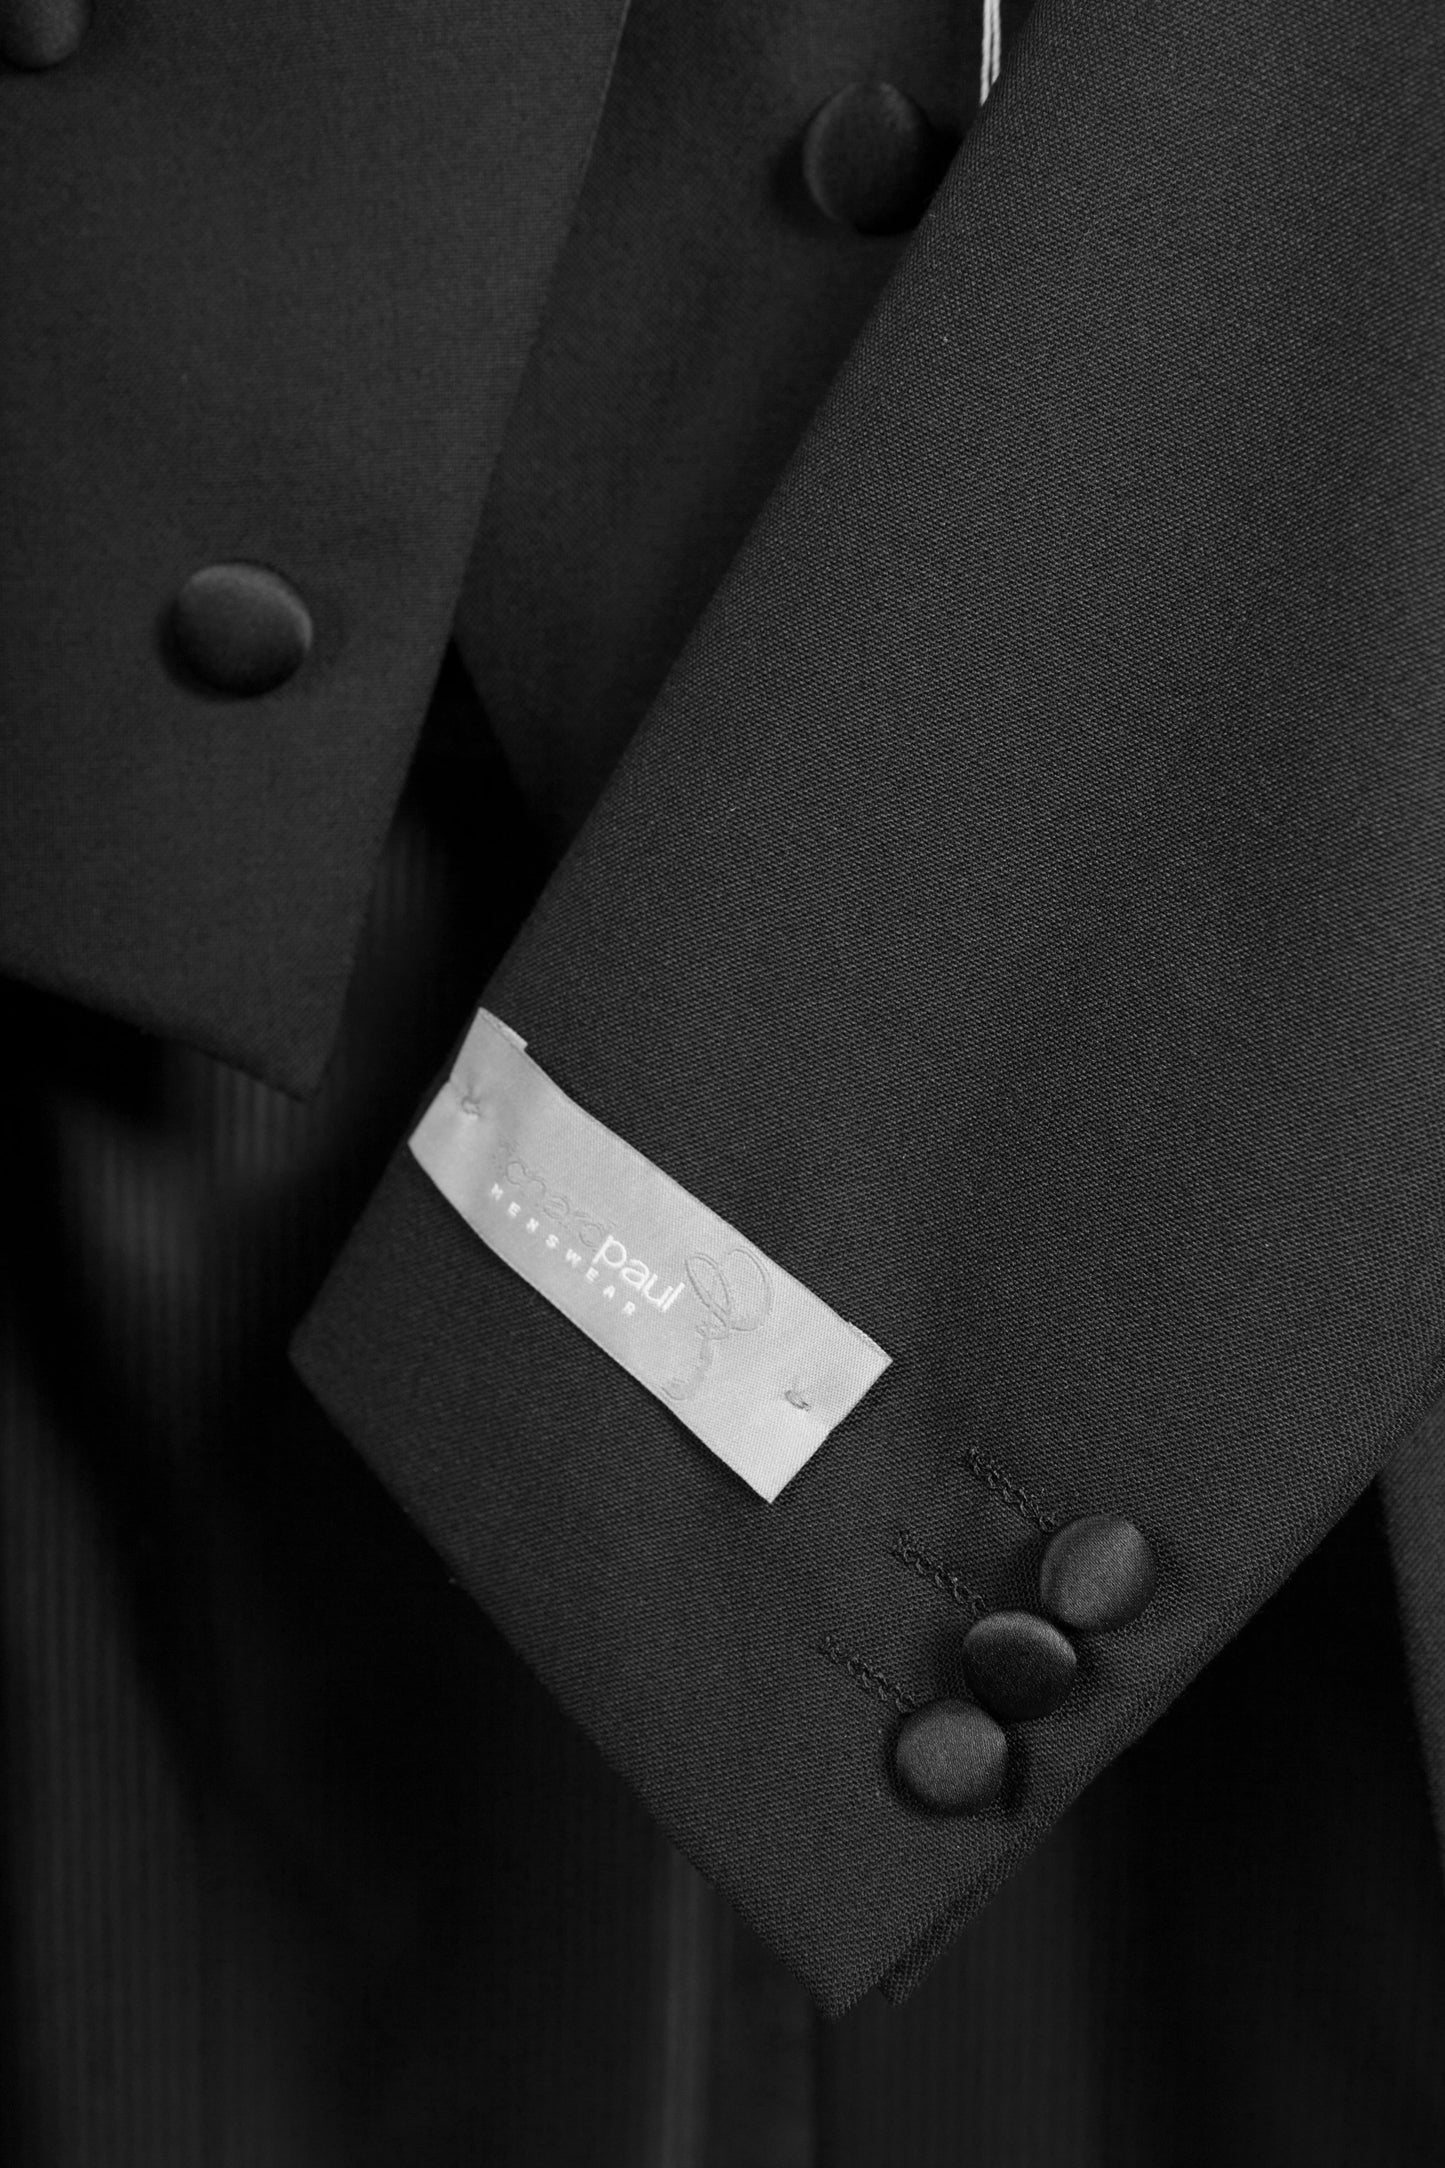 Black Four Piece Evening Tailcoat Suit - Brand New